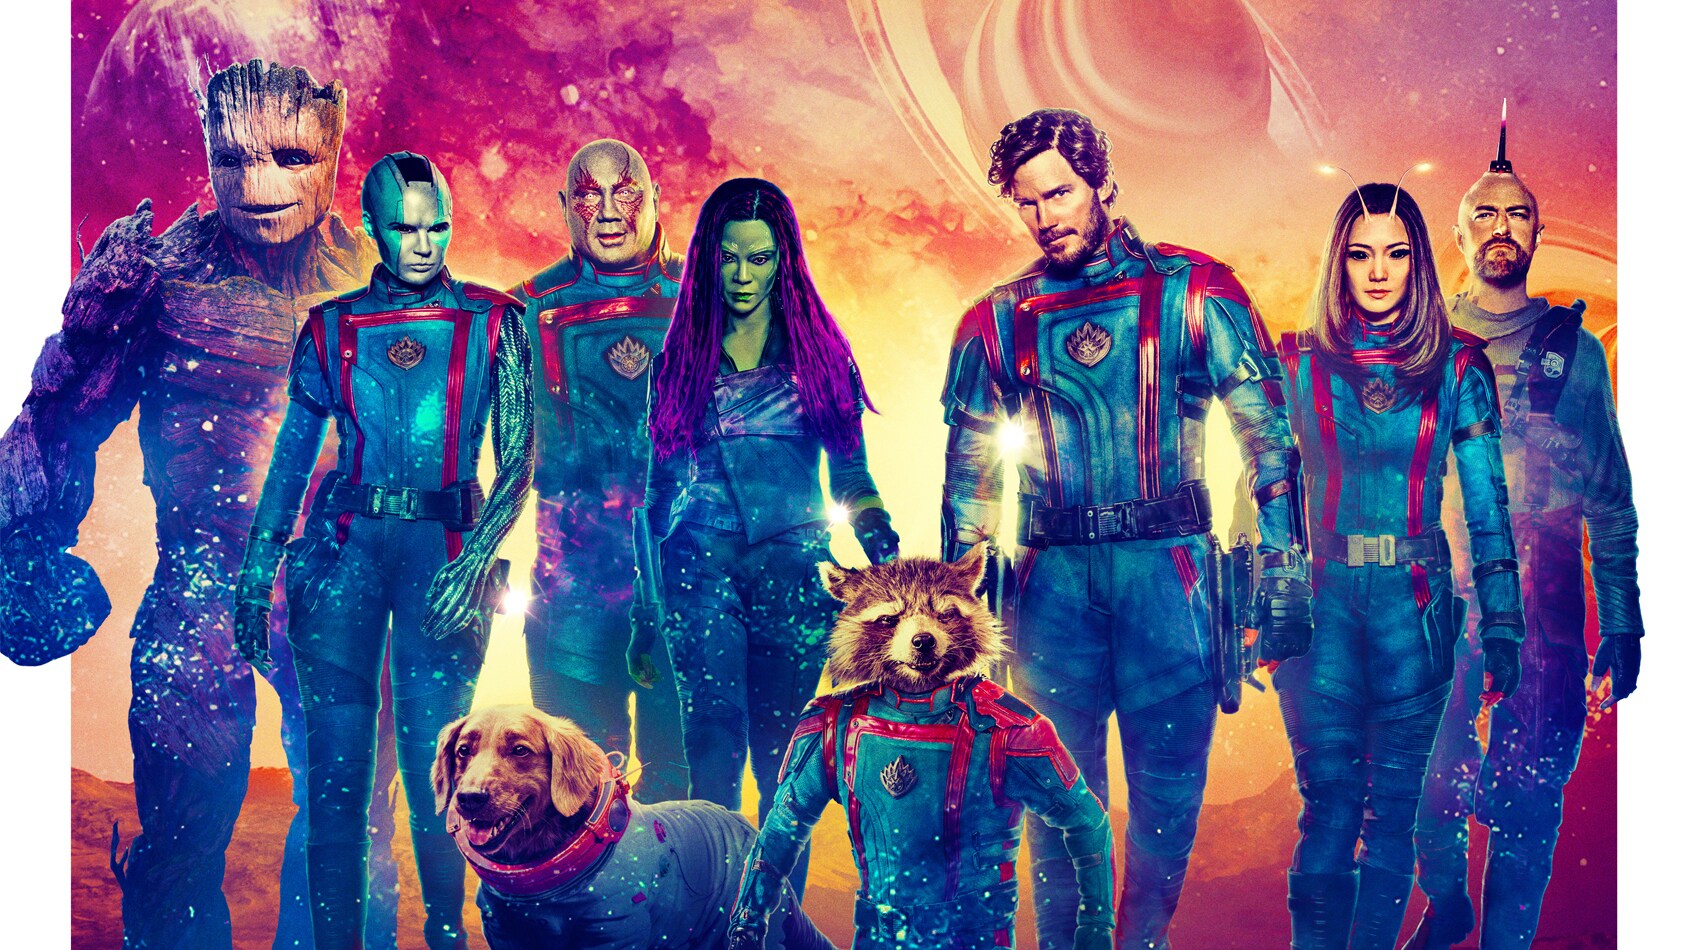 Disney+ Welcomes Marvel Studios’ “Guardians Of The Galaxy Vol. 3”